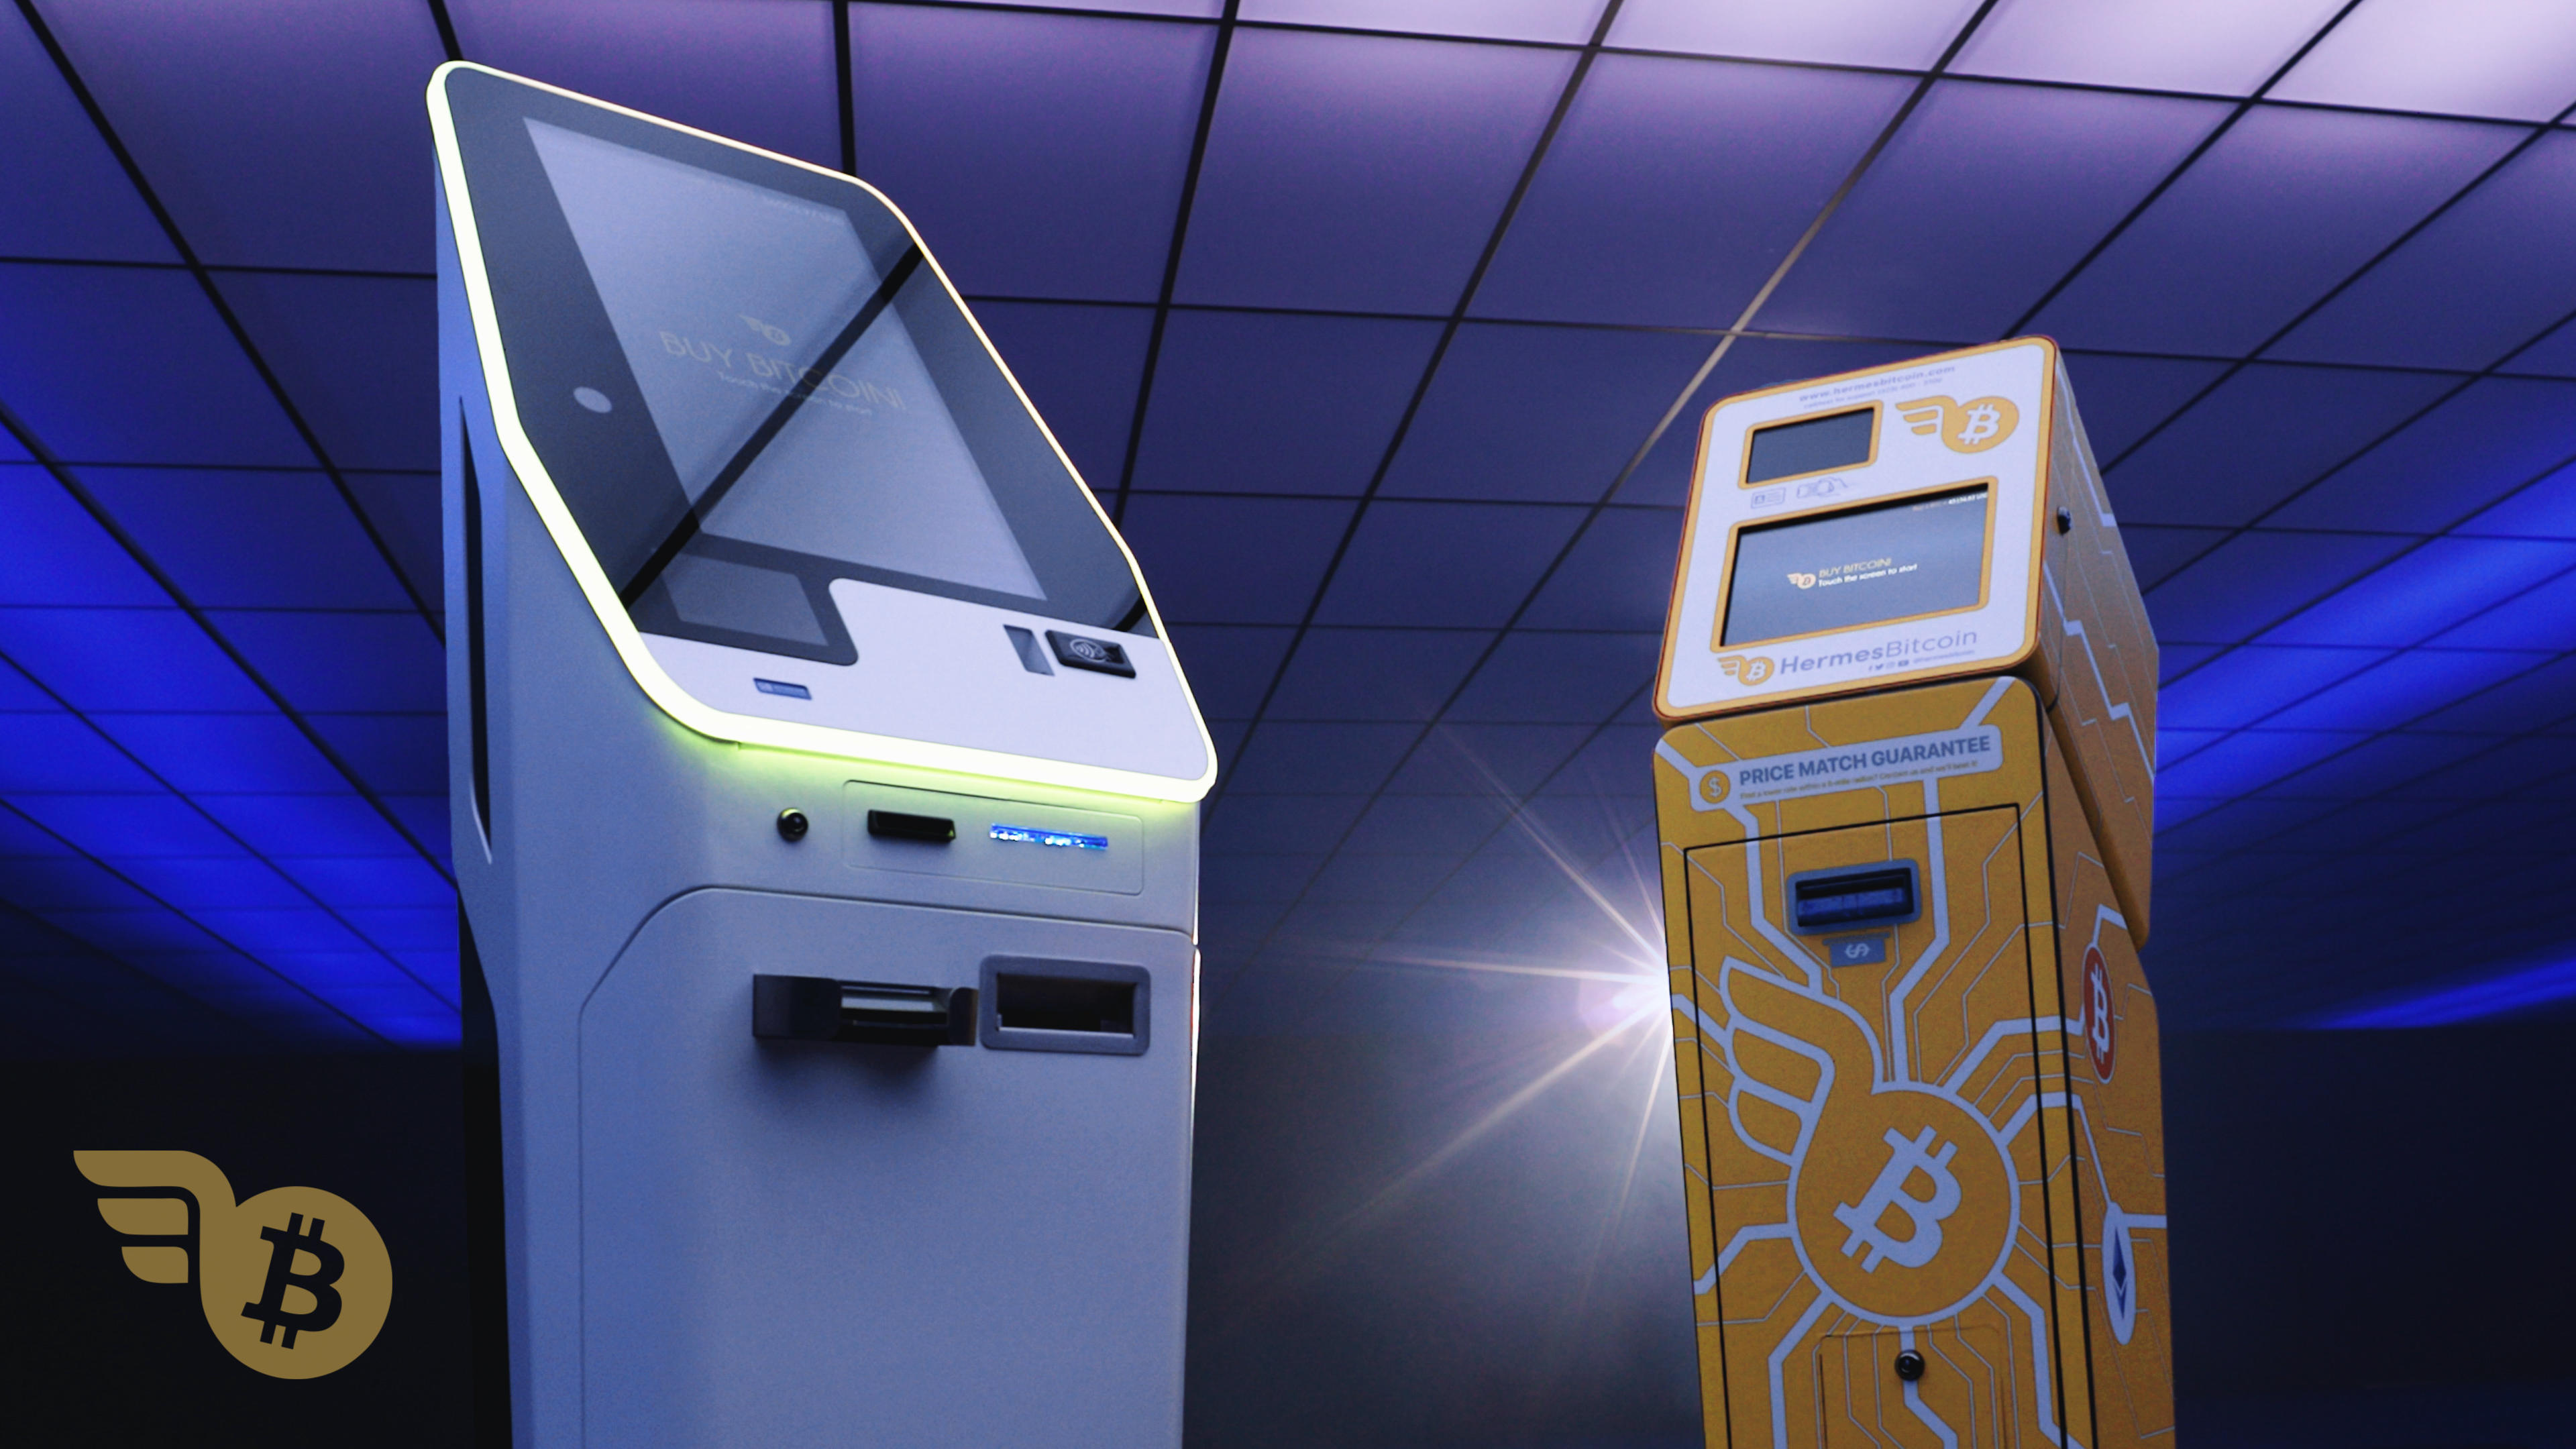 Hermes Bitcoin ATM - Anaheim Anaheim (323)400-3100